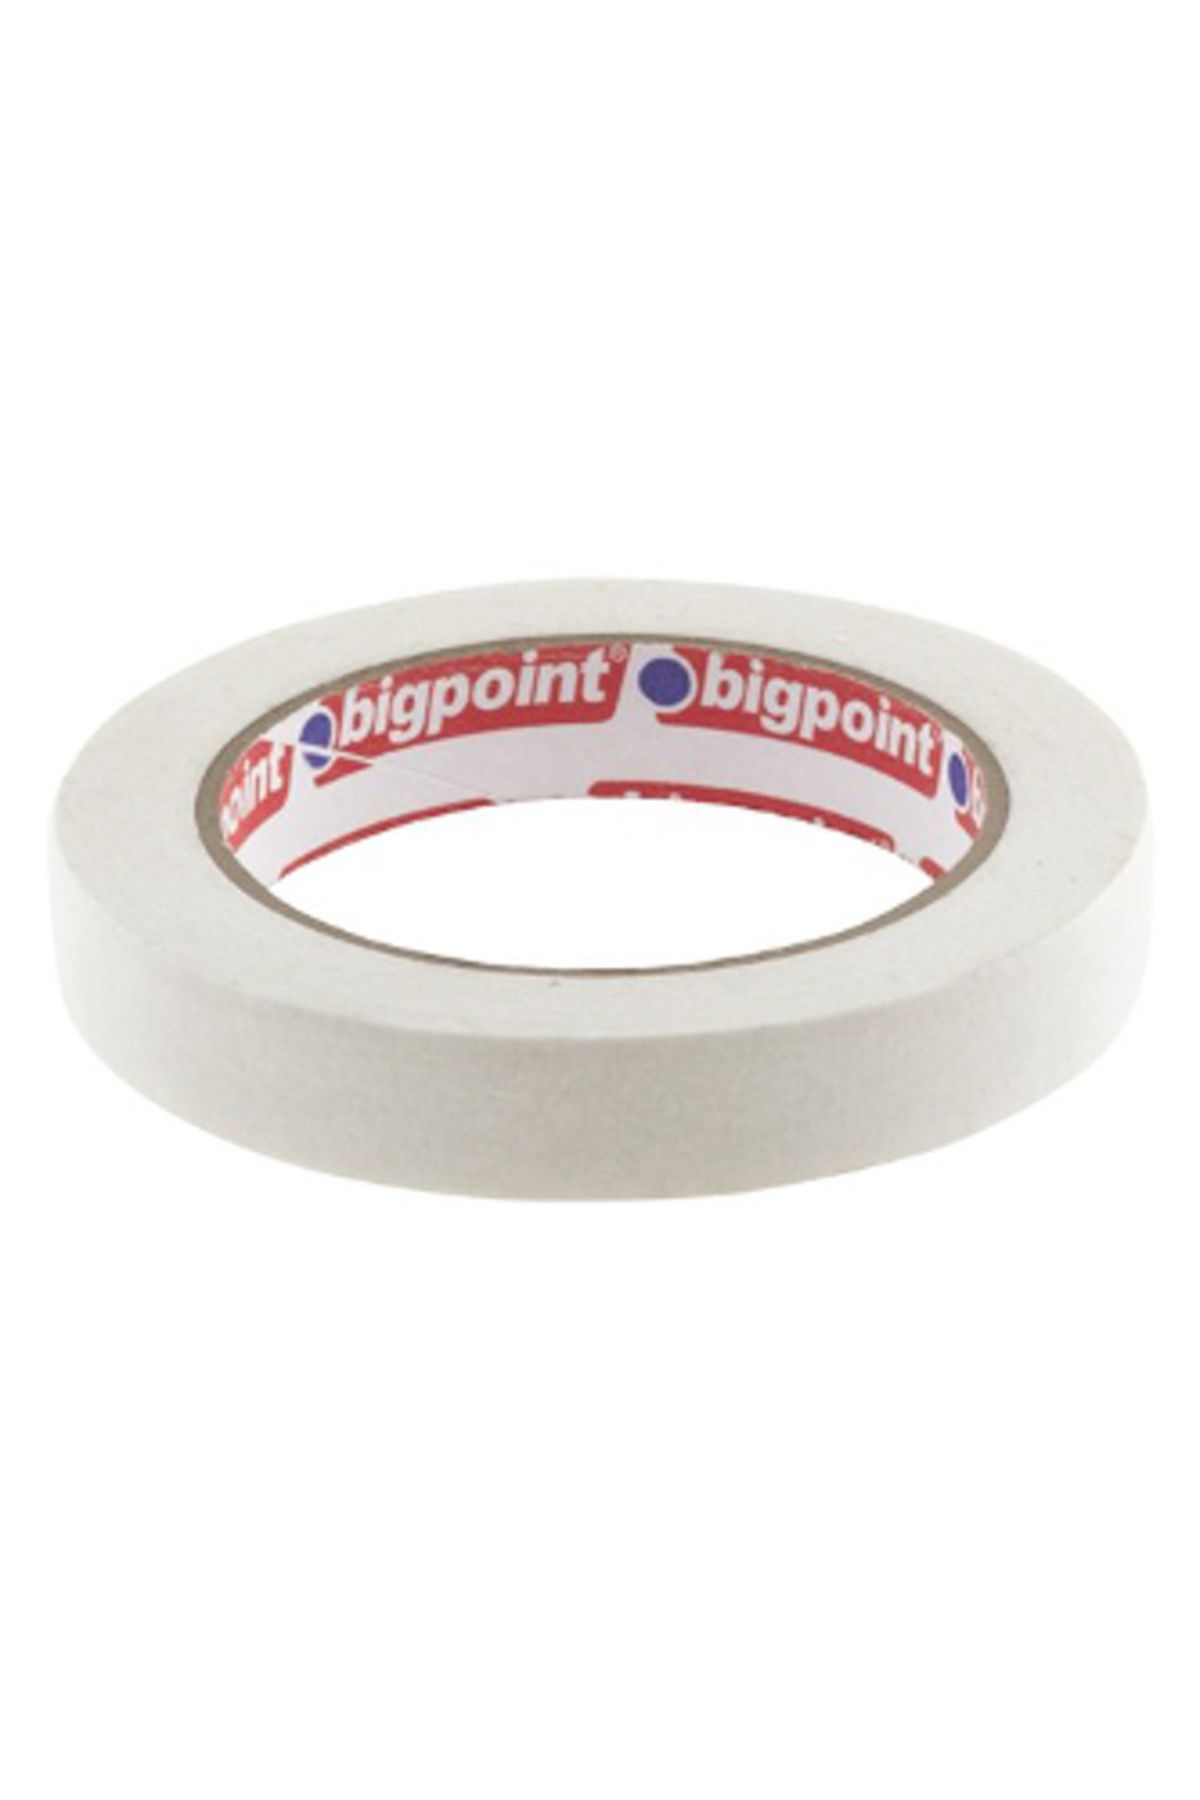 Bigpoint Maskeleme Bandı 18x40mt 150615